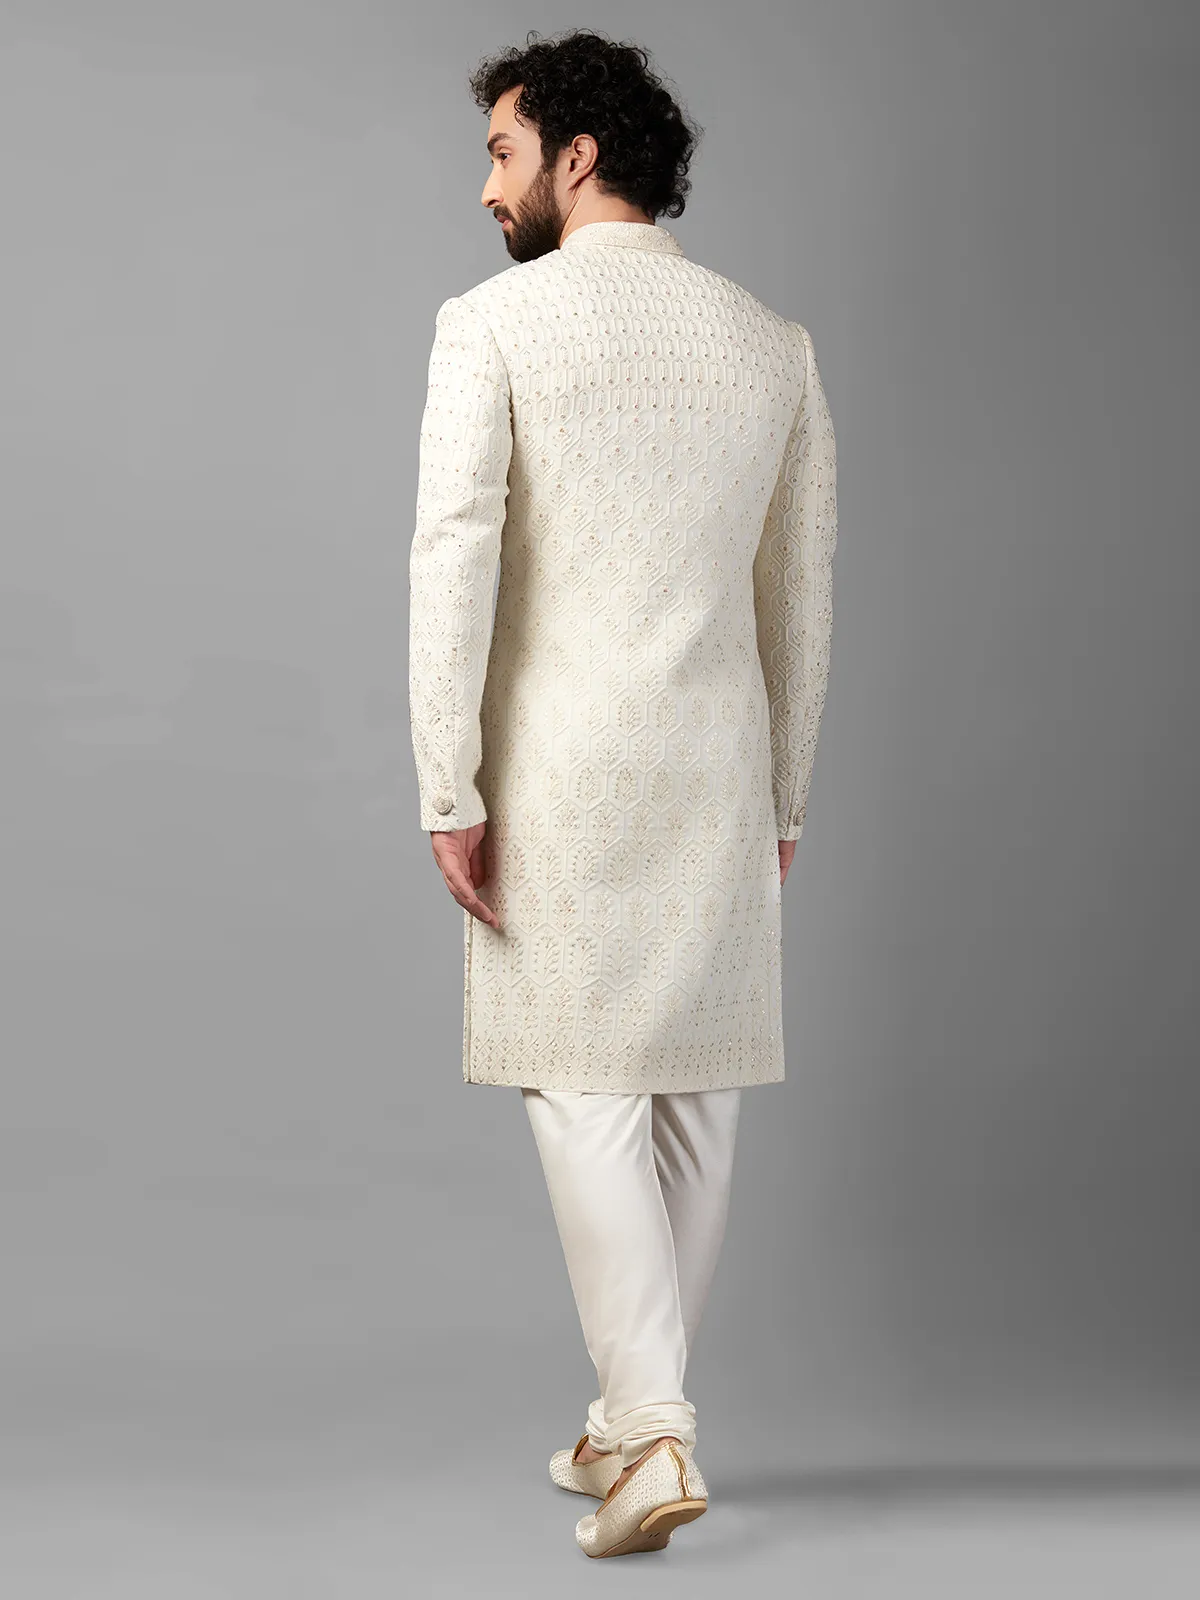 Awesome off-white silk sherwani for wedding